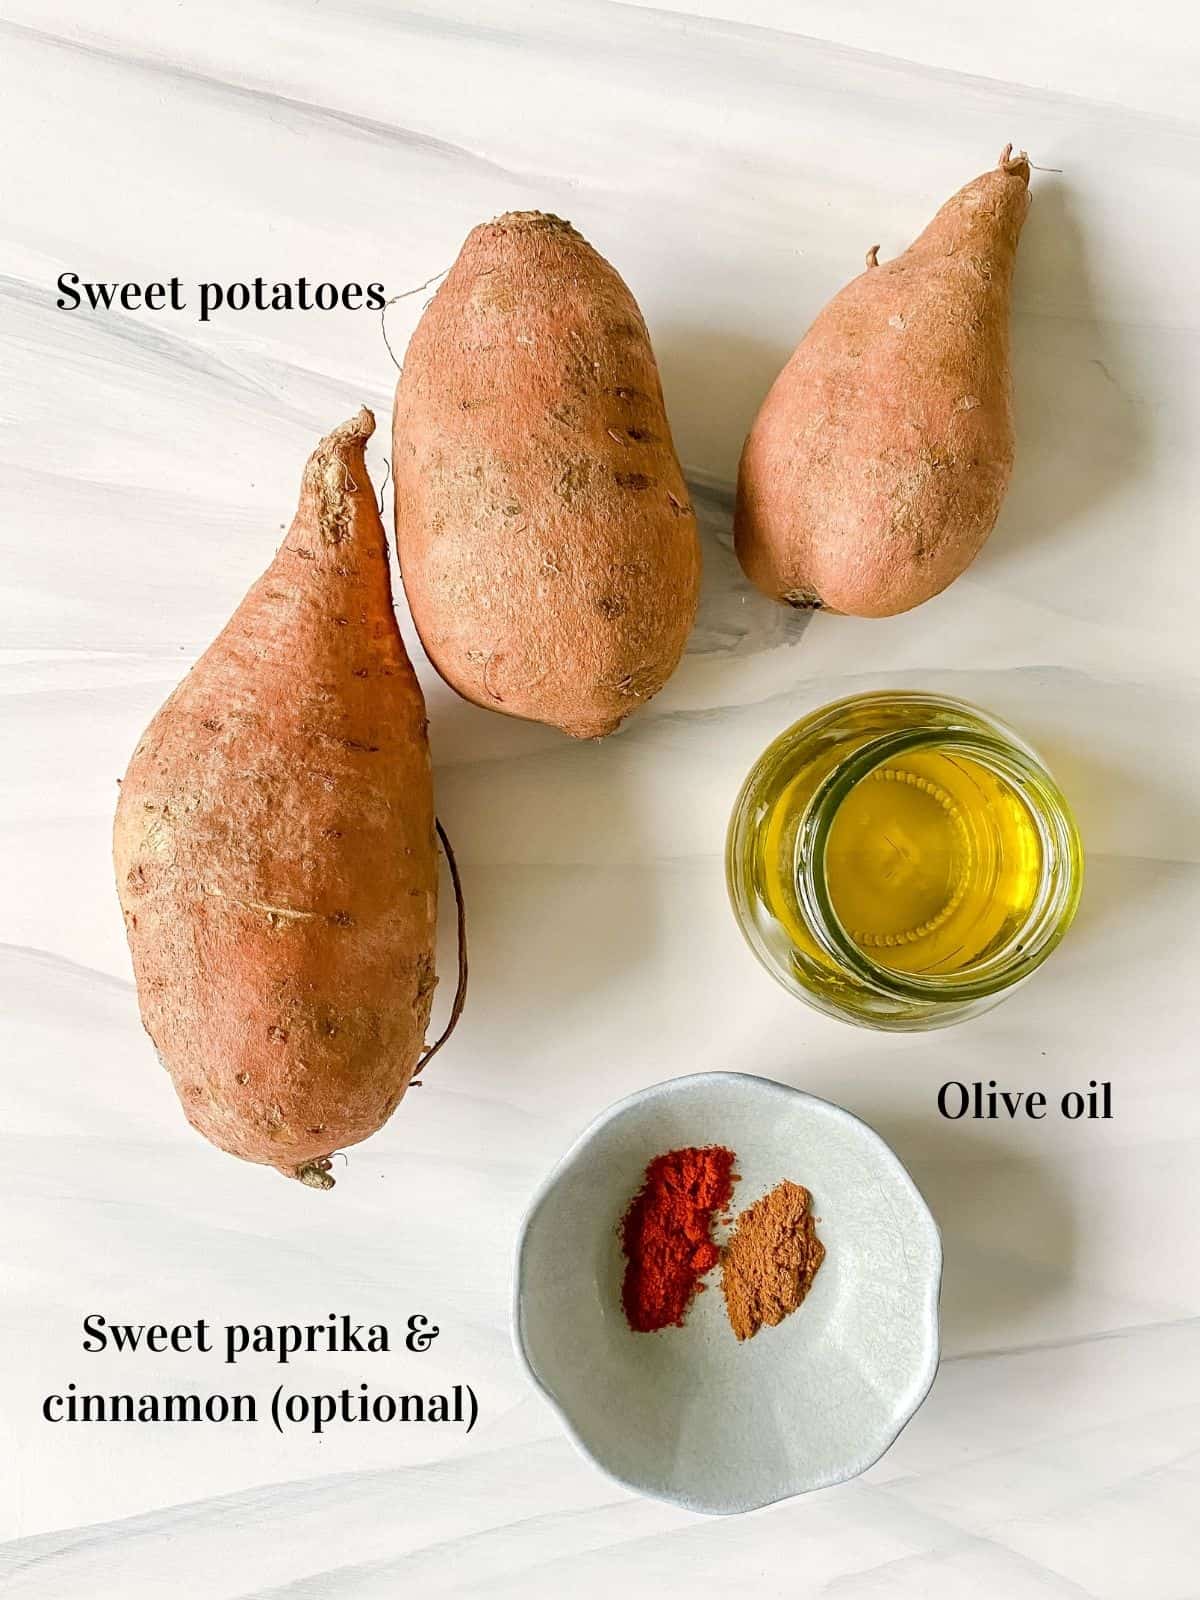 sweet potatoes, olive oil, sweet paprika and cinnamon.